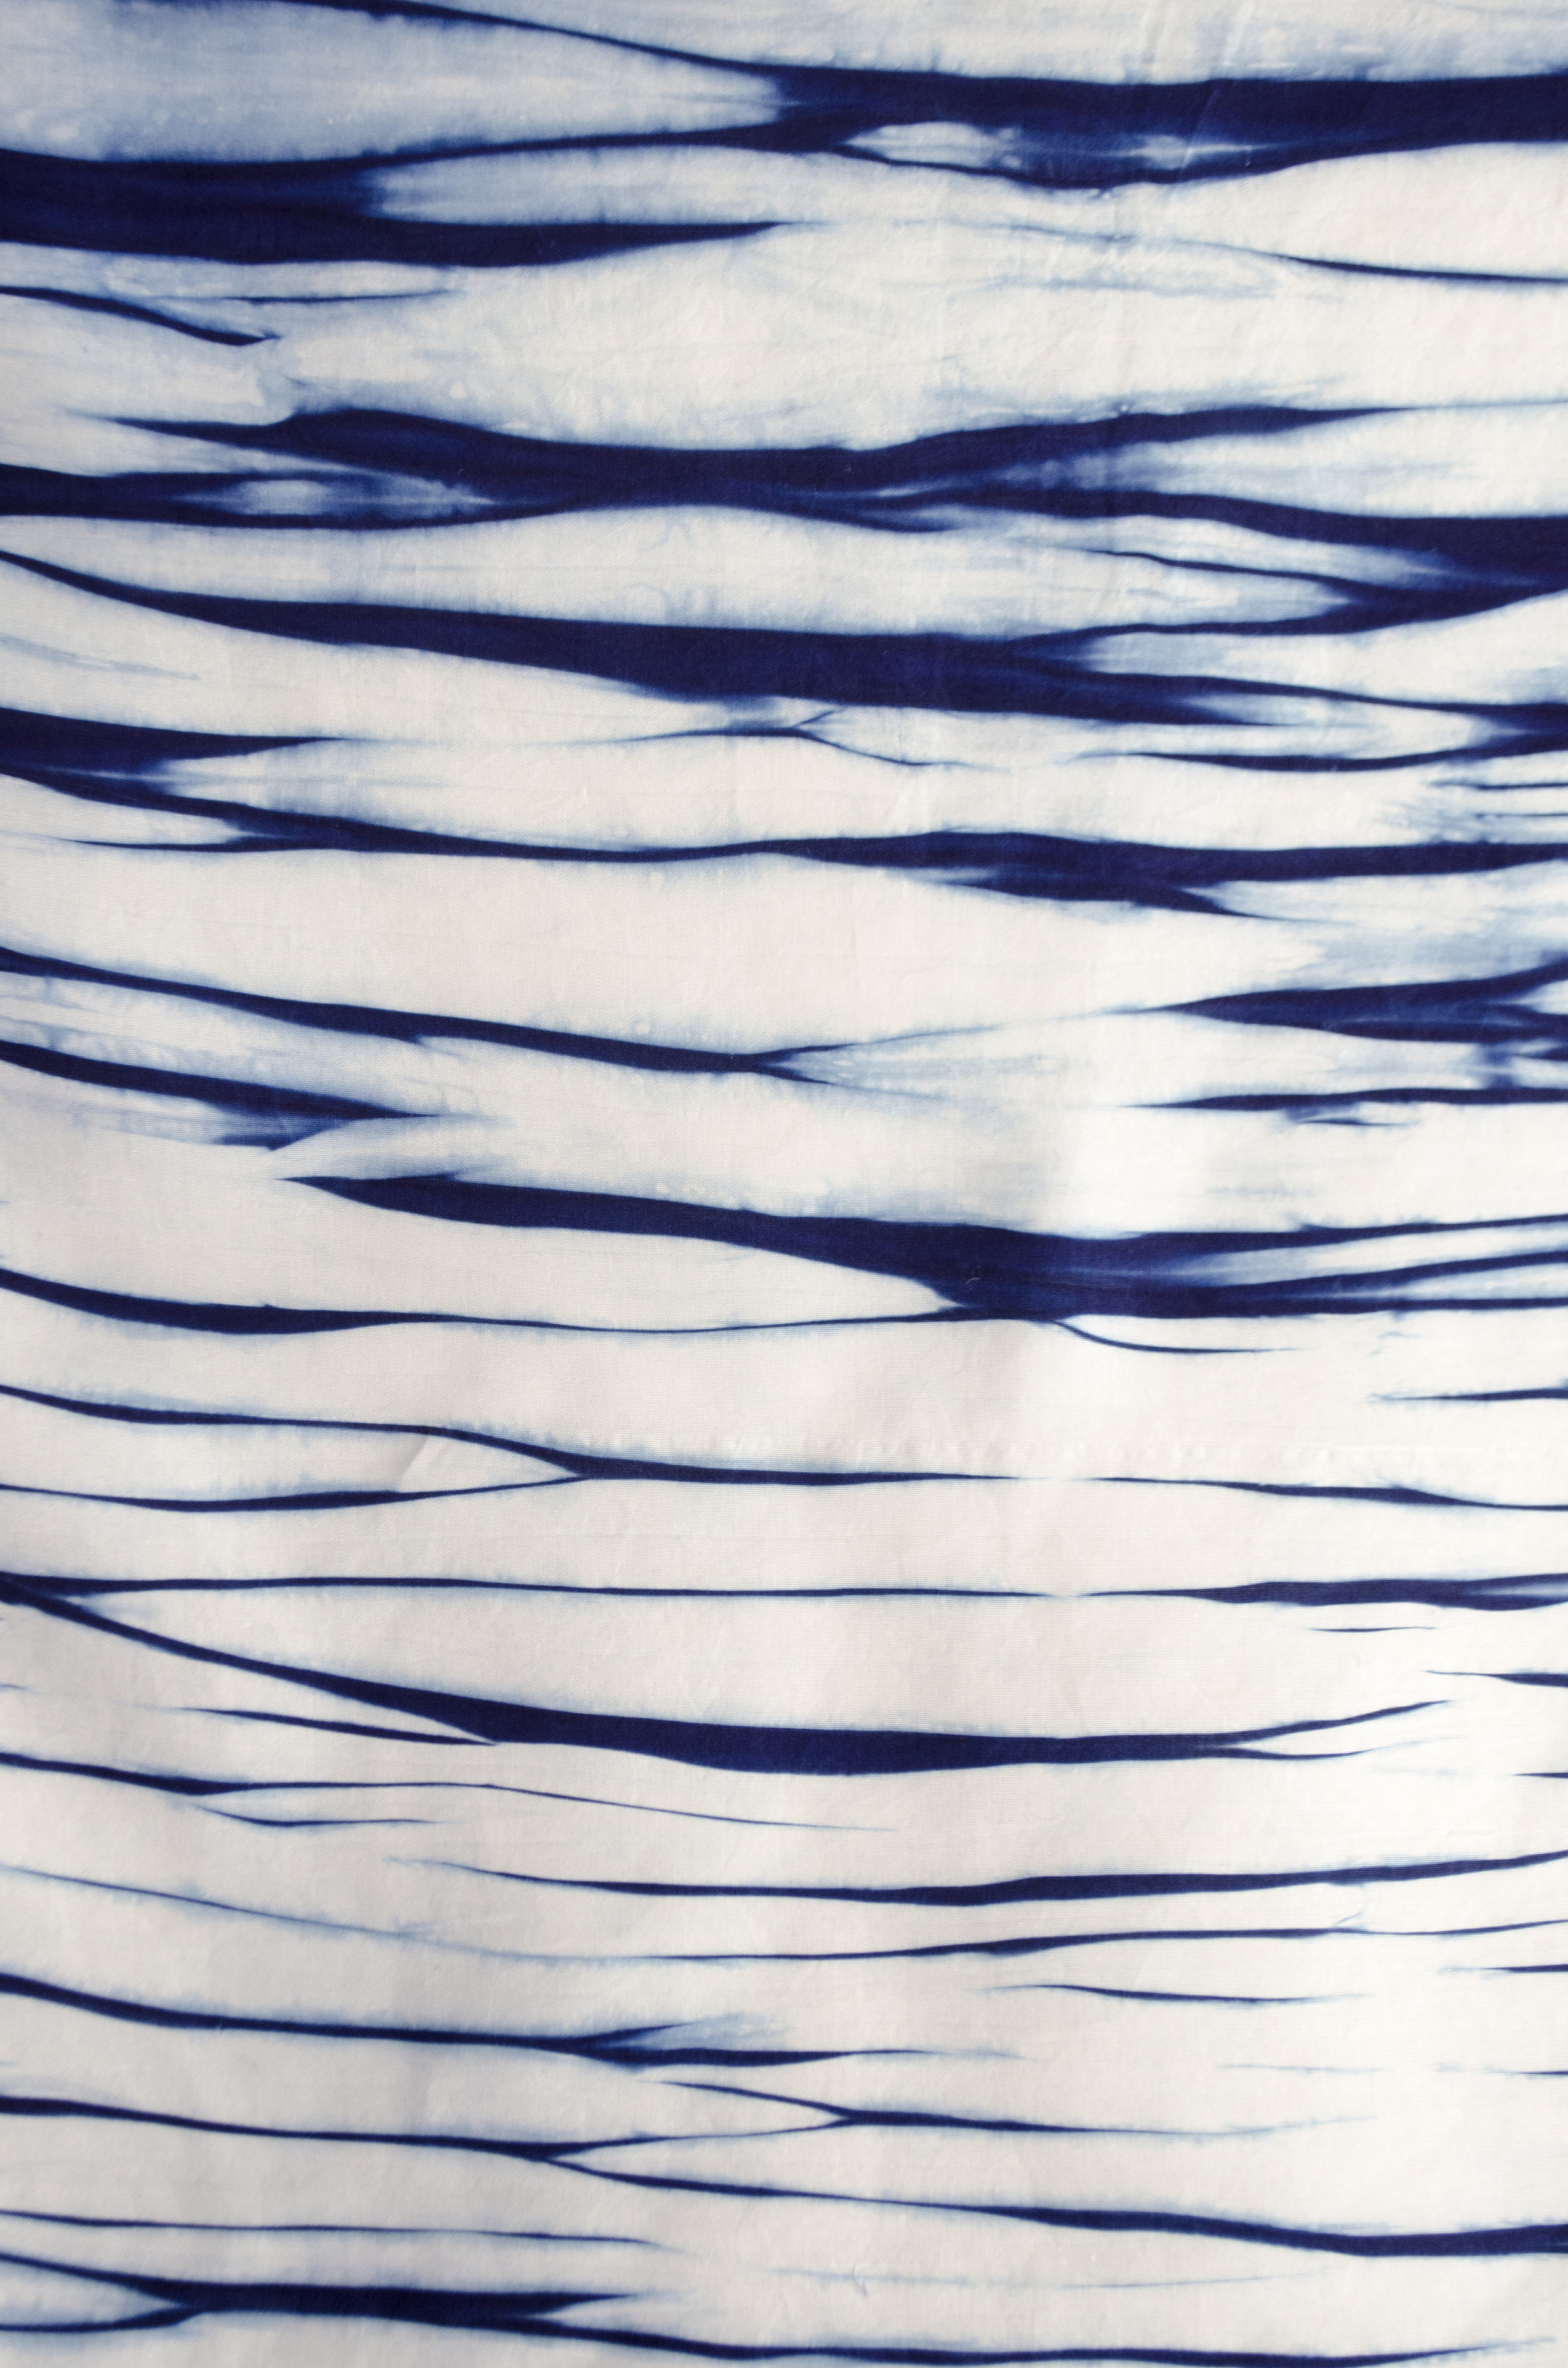 Arashi Shibor Dyed Vintage Linen Tablecloth